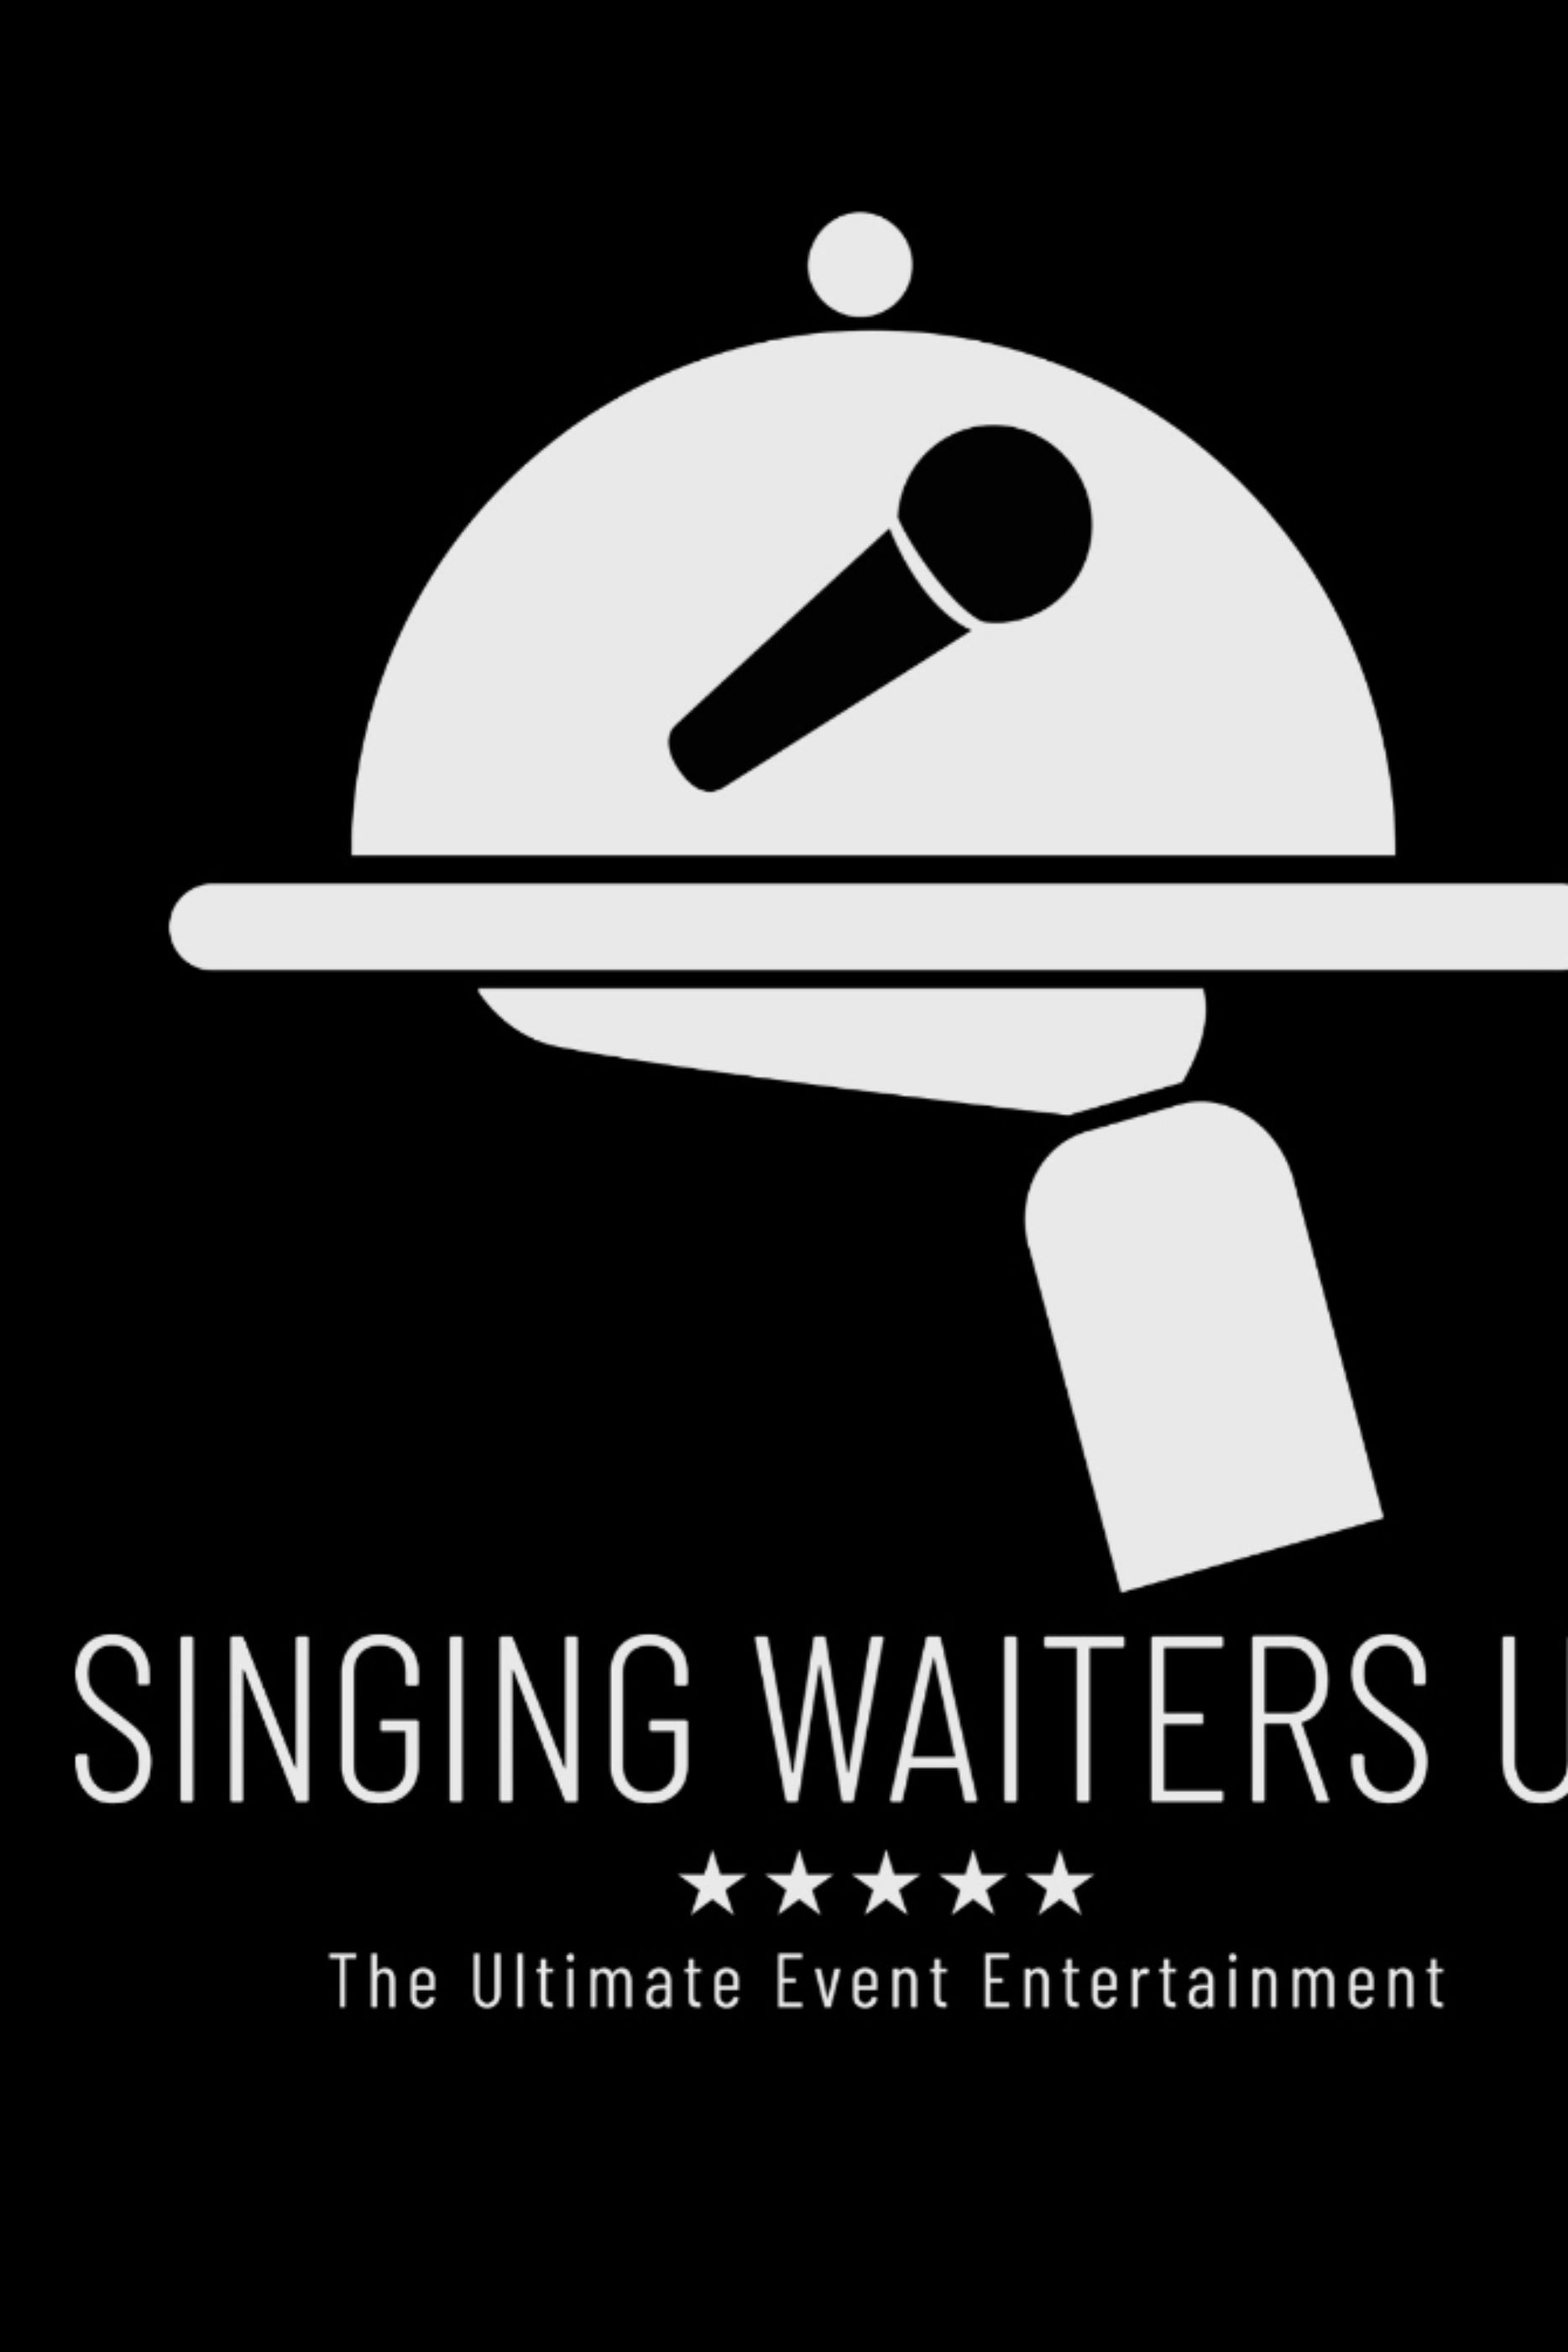 singing waiters uk image crop